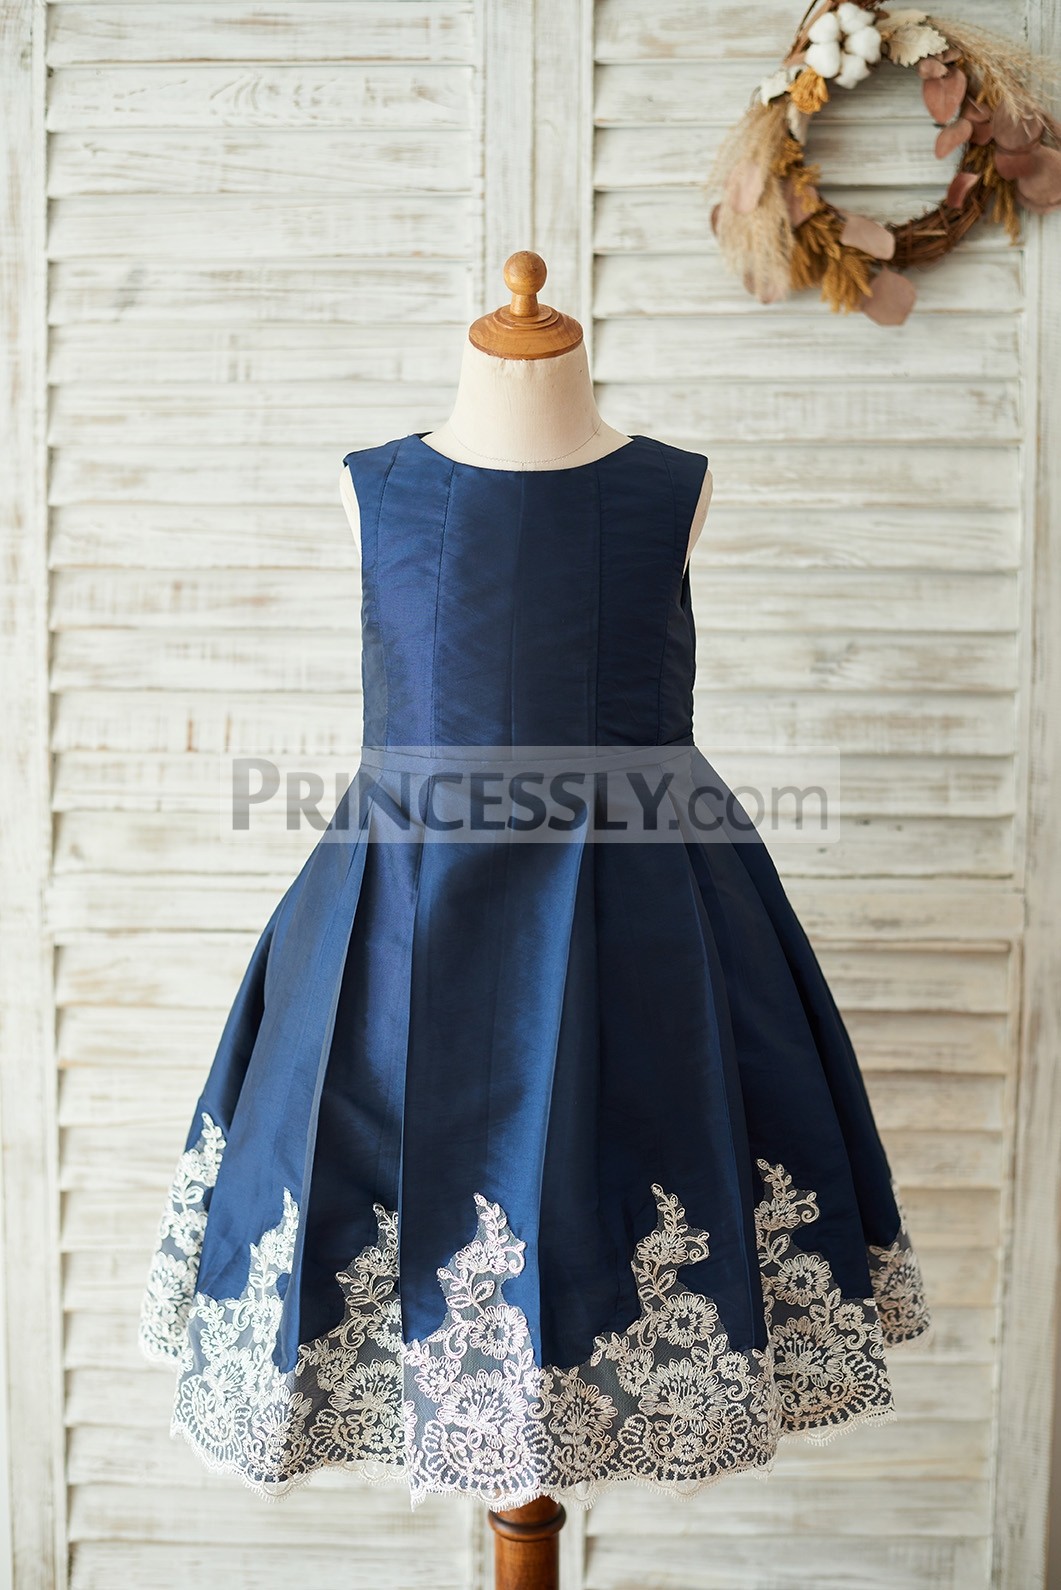 Navy blue taffeta wedding flower girl dress with sliver lace trim